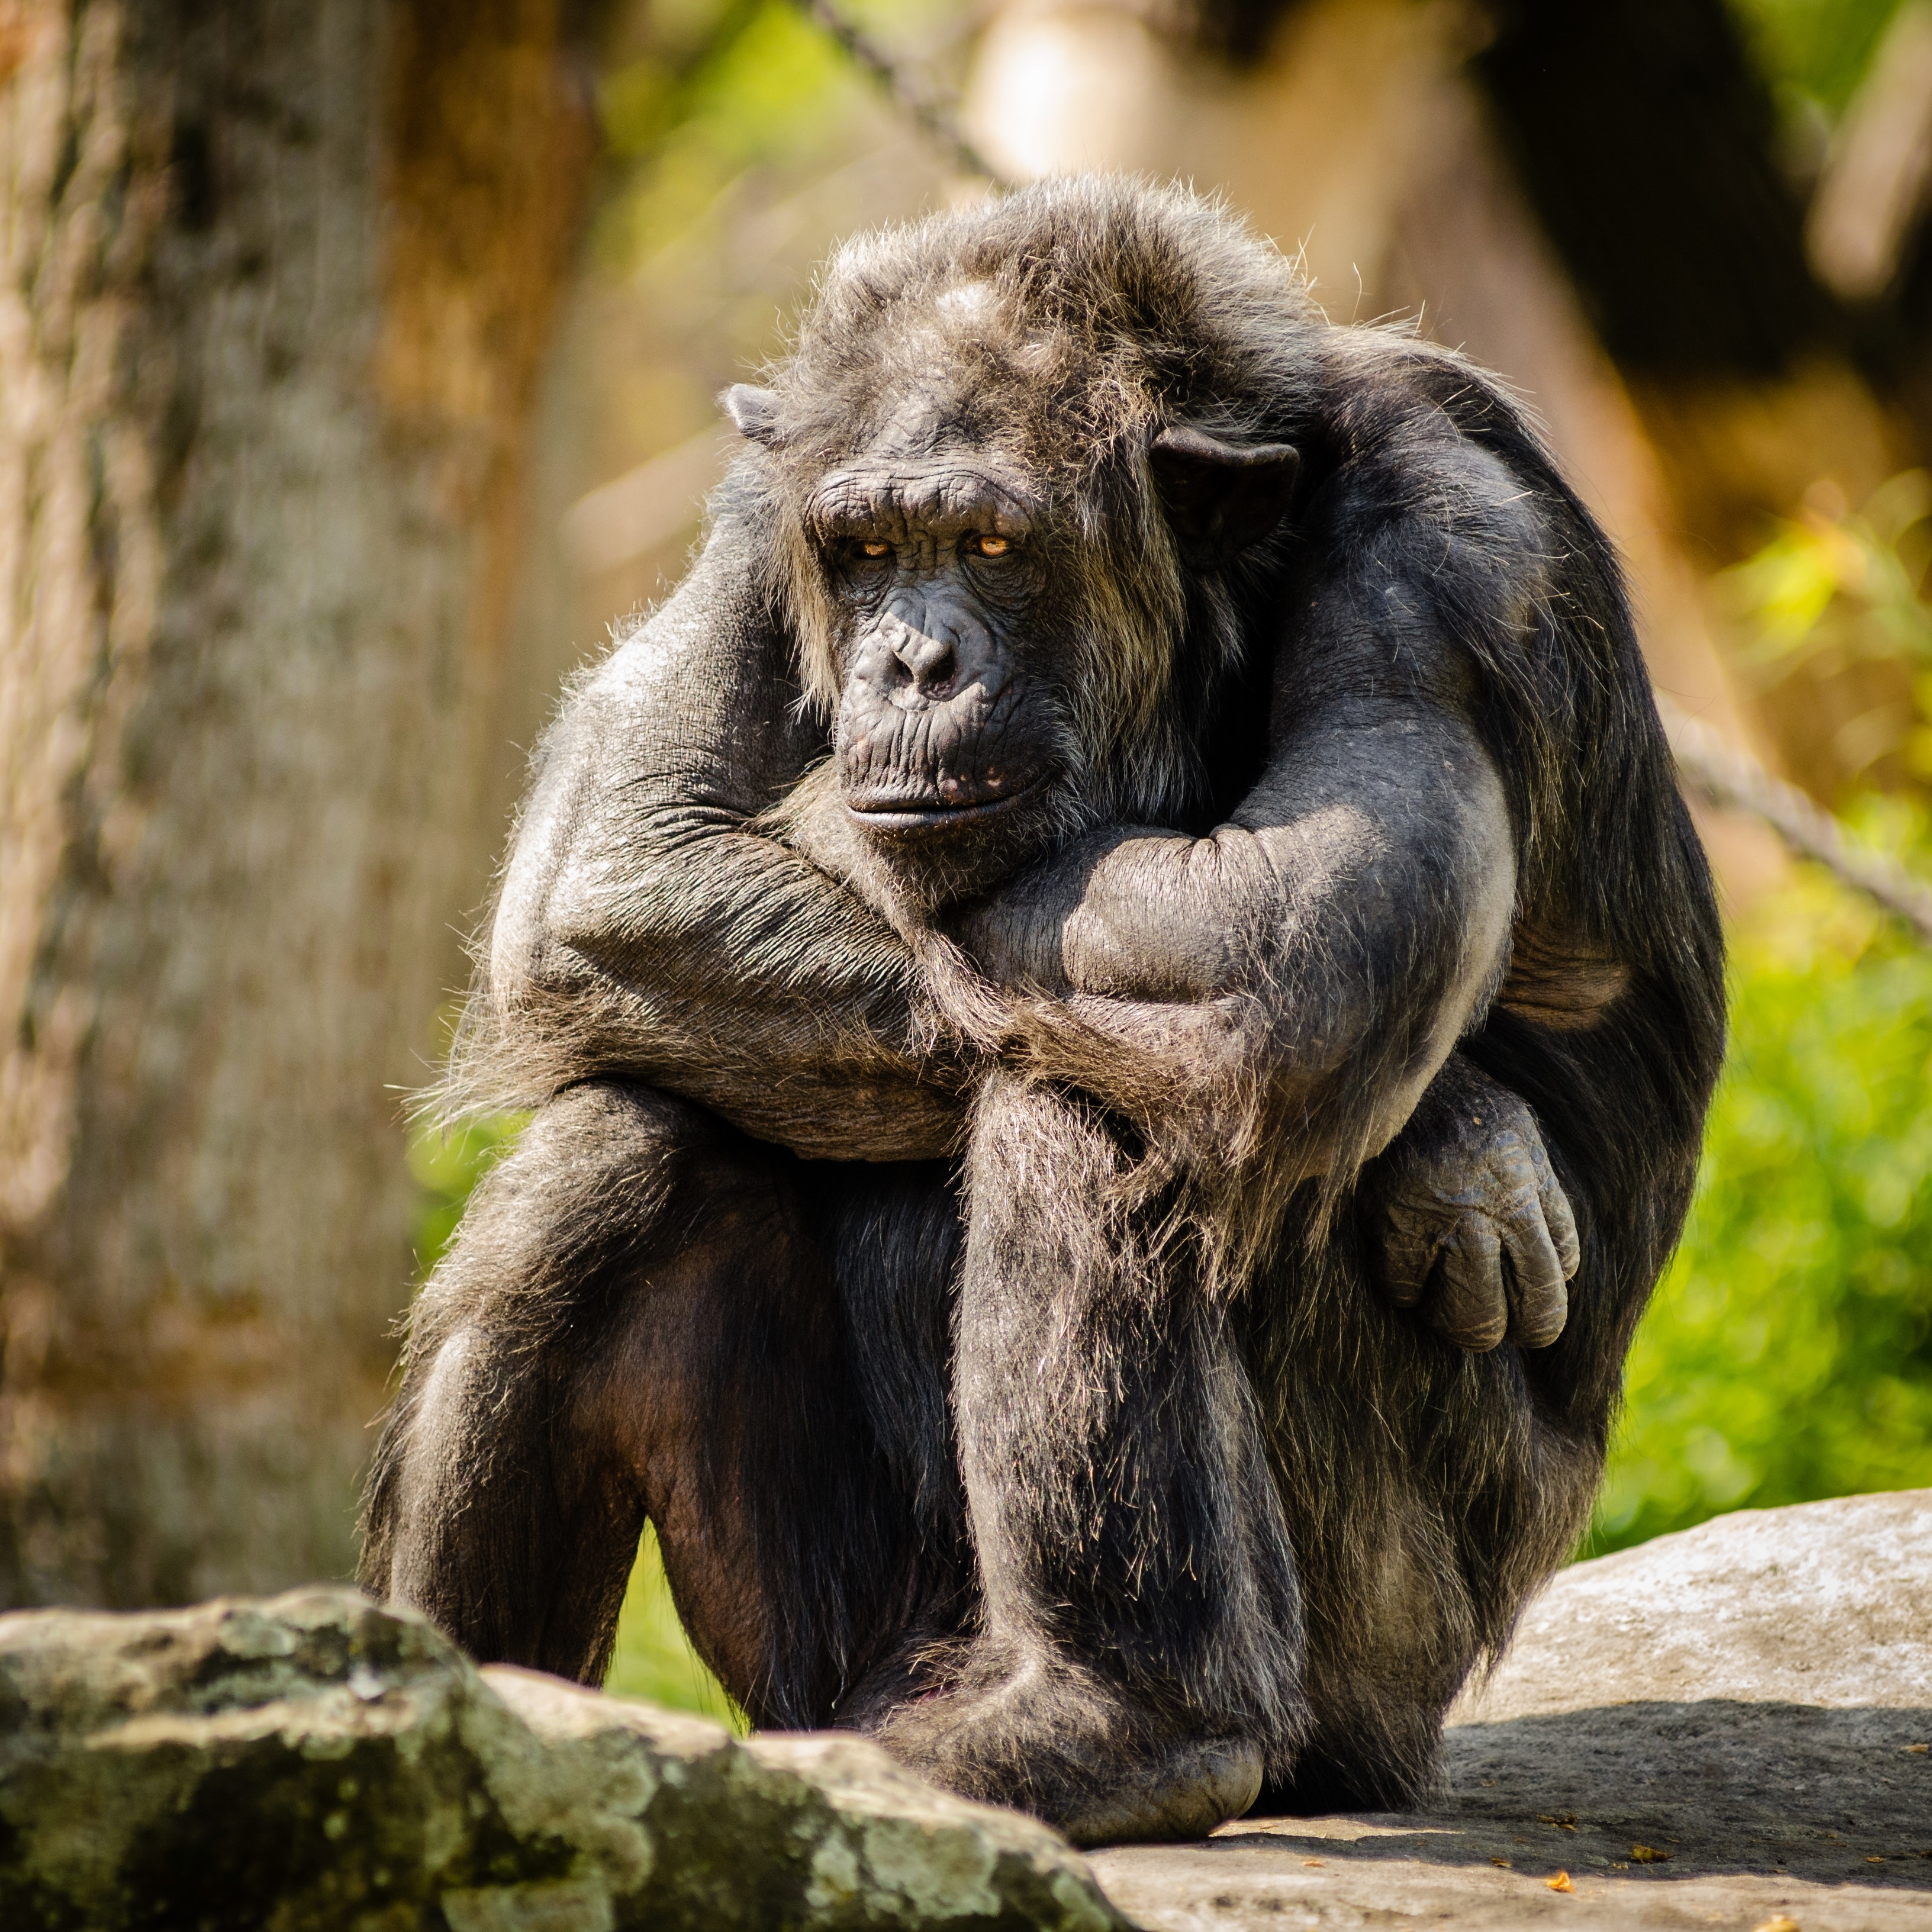 Chimpanzee sitting on stone